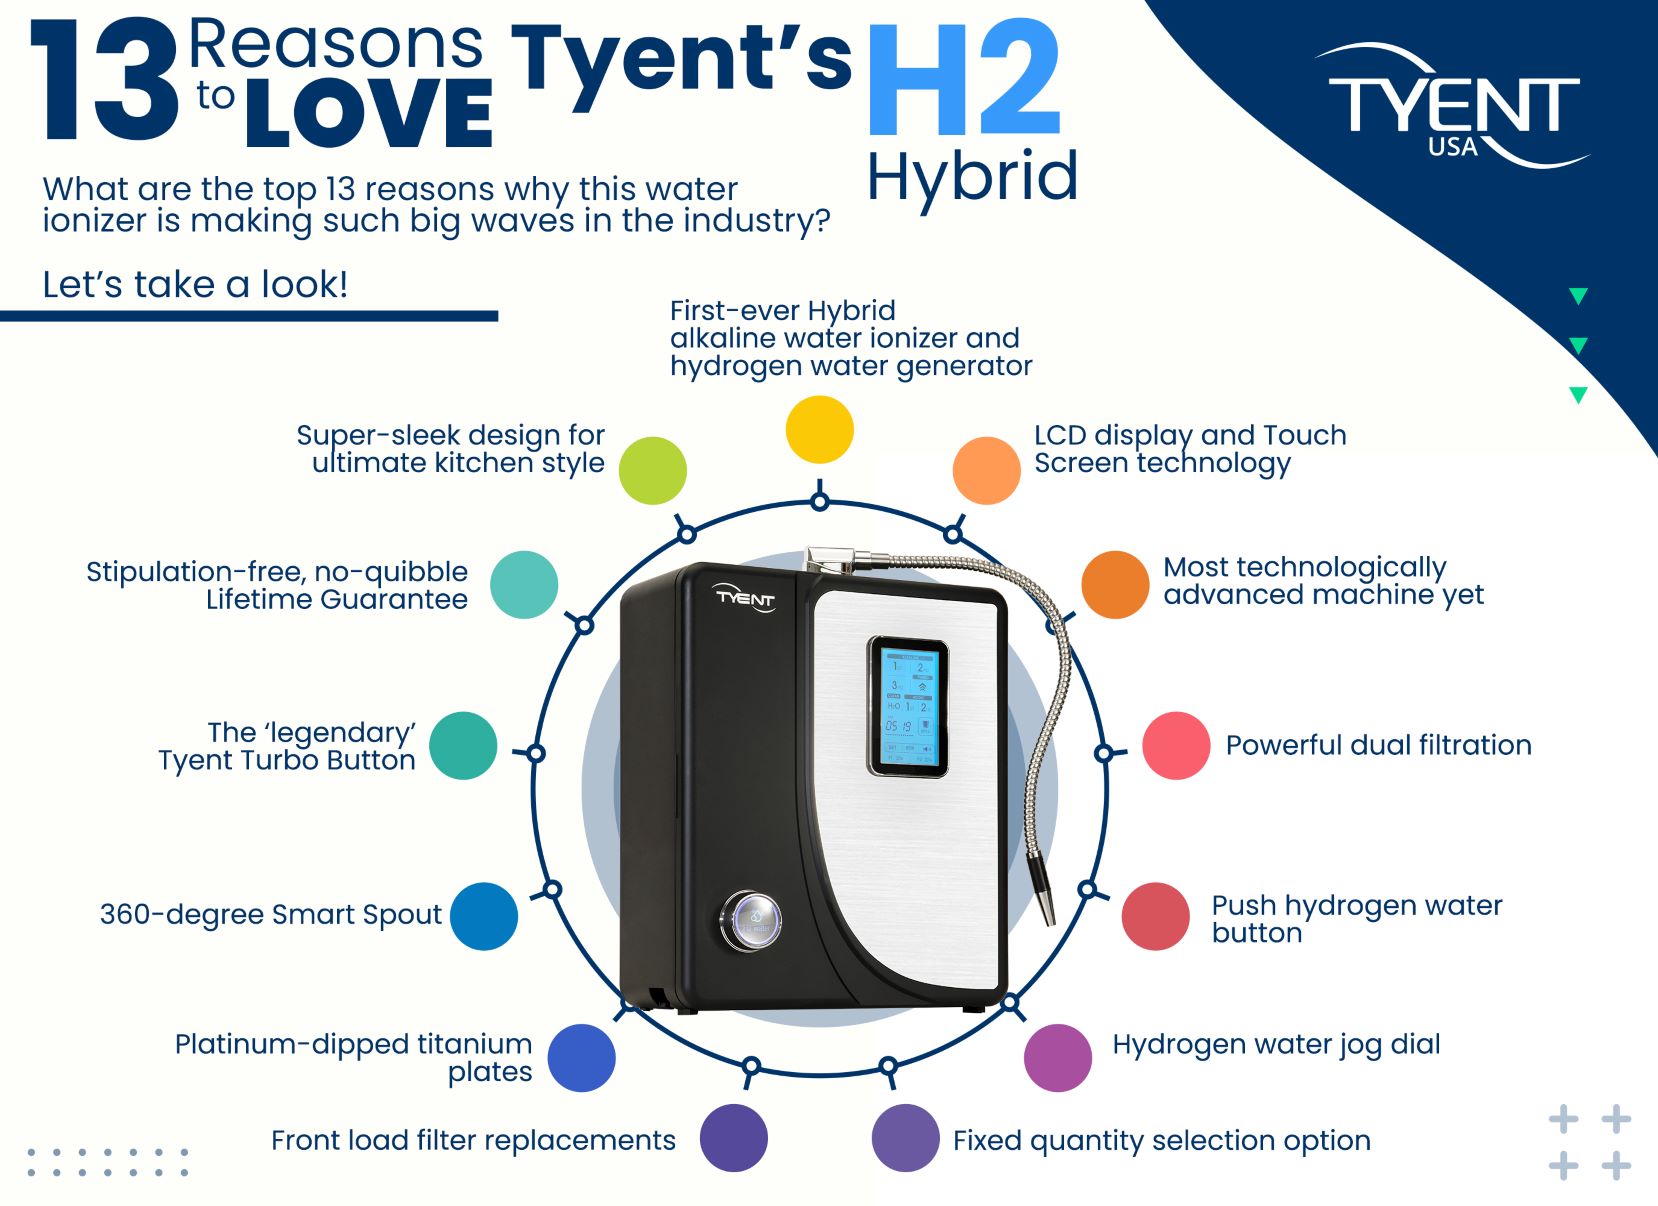 13 Reasons to Love Tyent’s H2 Hybrid